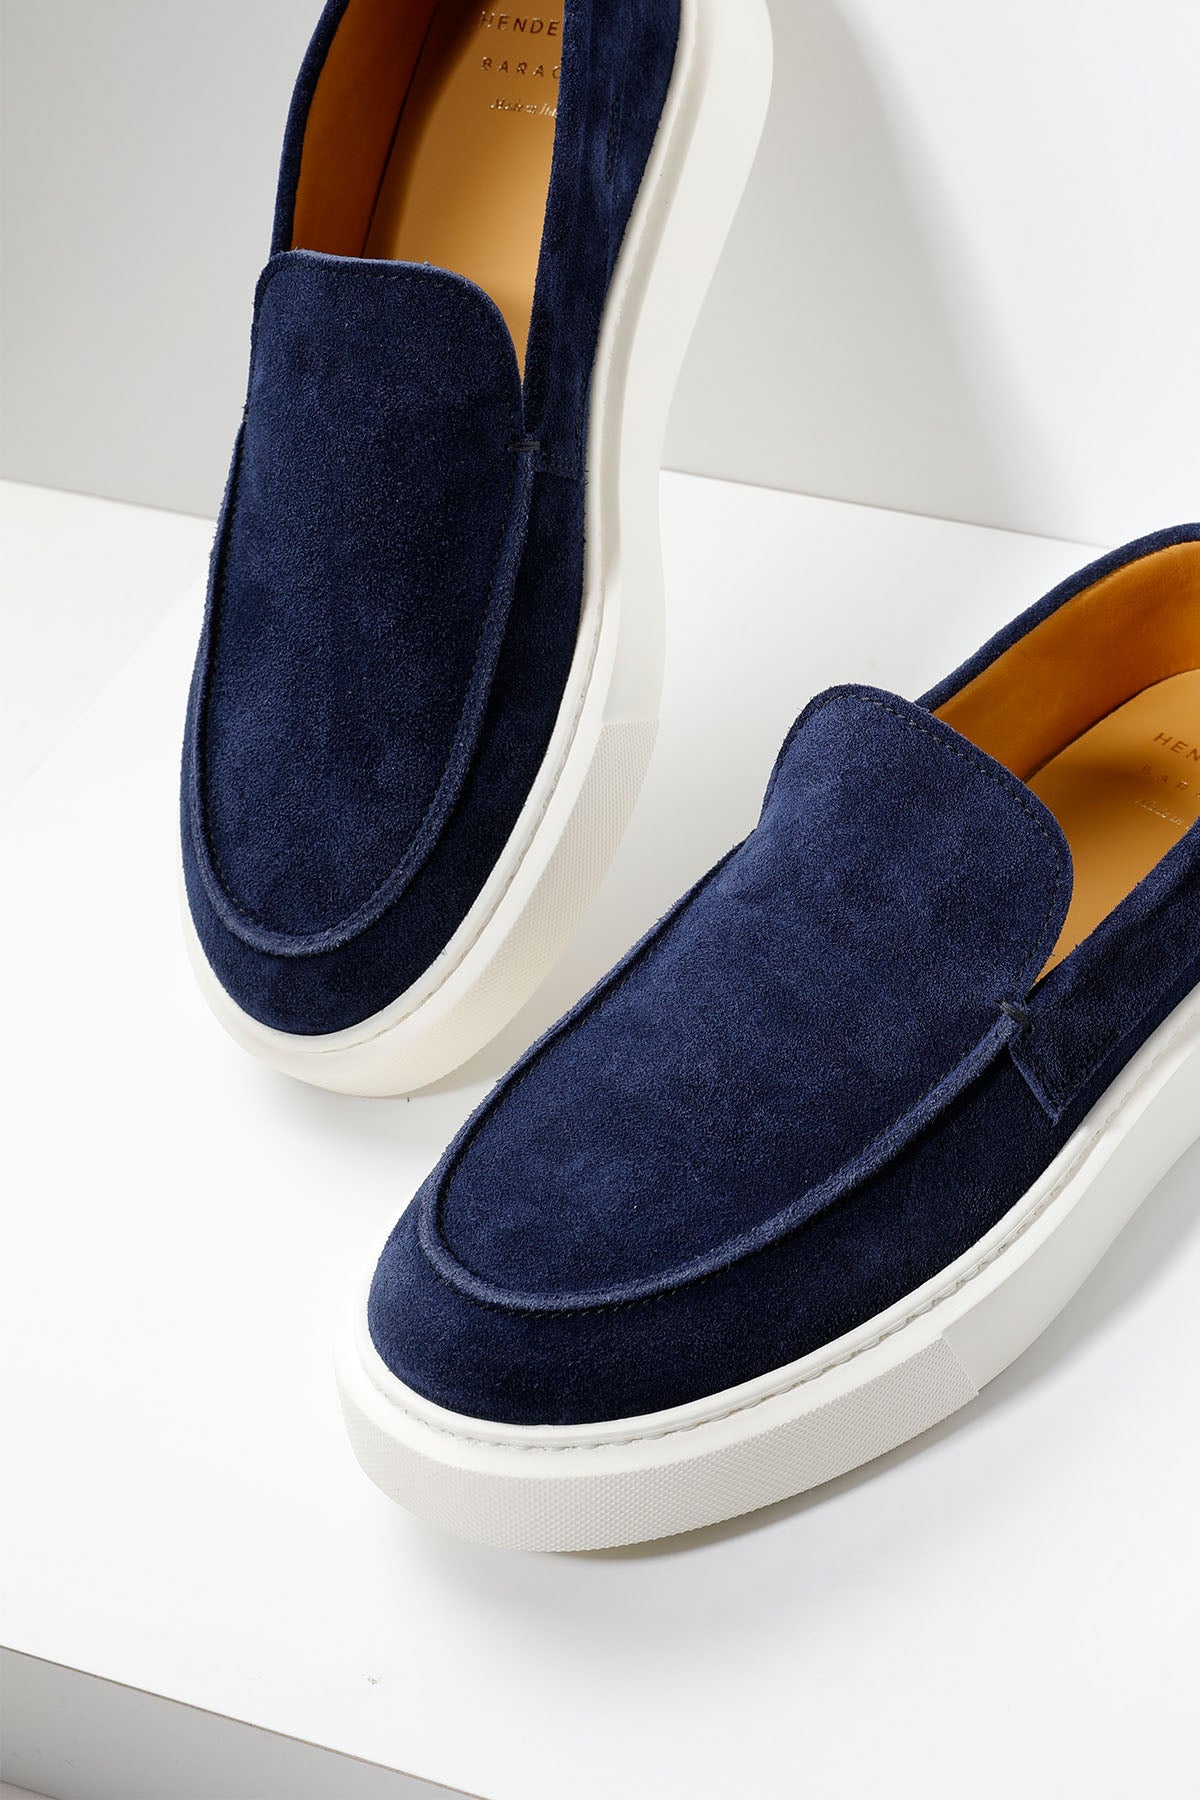 Henderson Amos Extralight Süet Loafer Ayakkabı-Libas Trendy Fashion Store